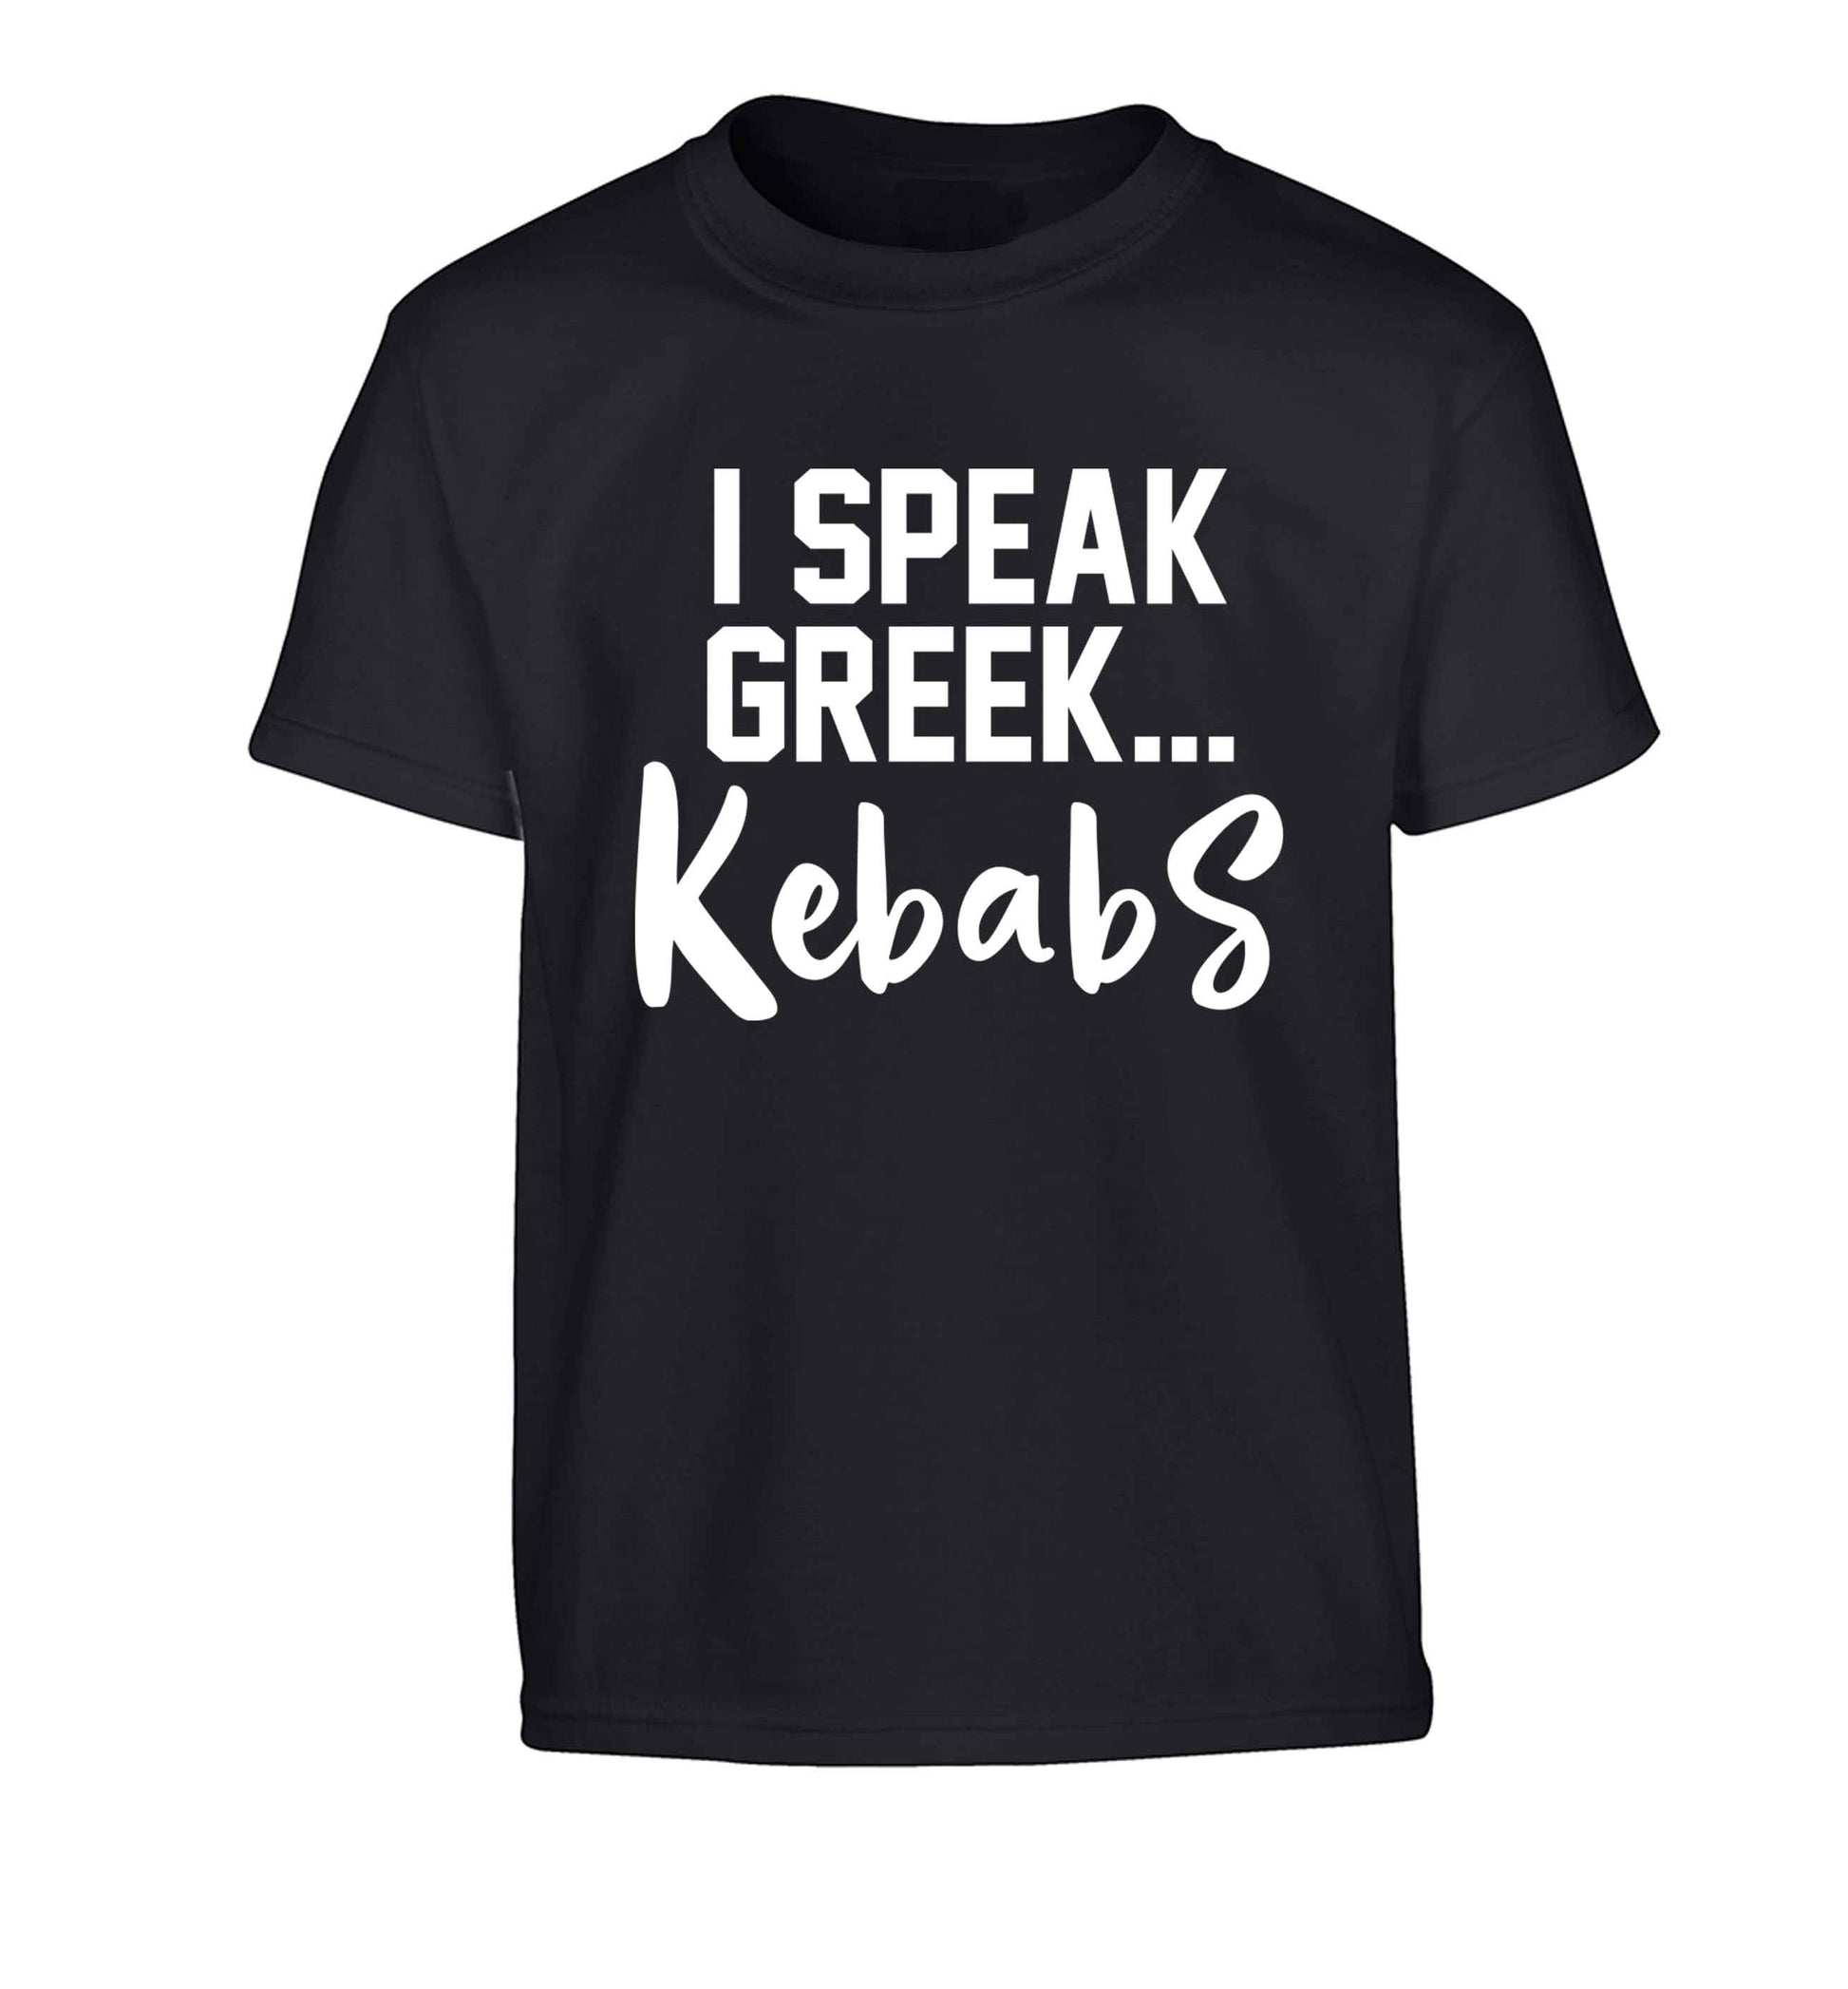 I speak Greek...kebabs Children's black Tshirt 12-13 Years